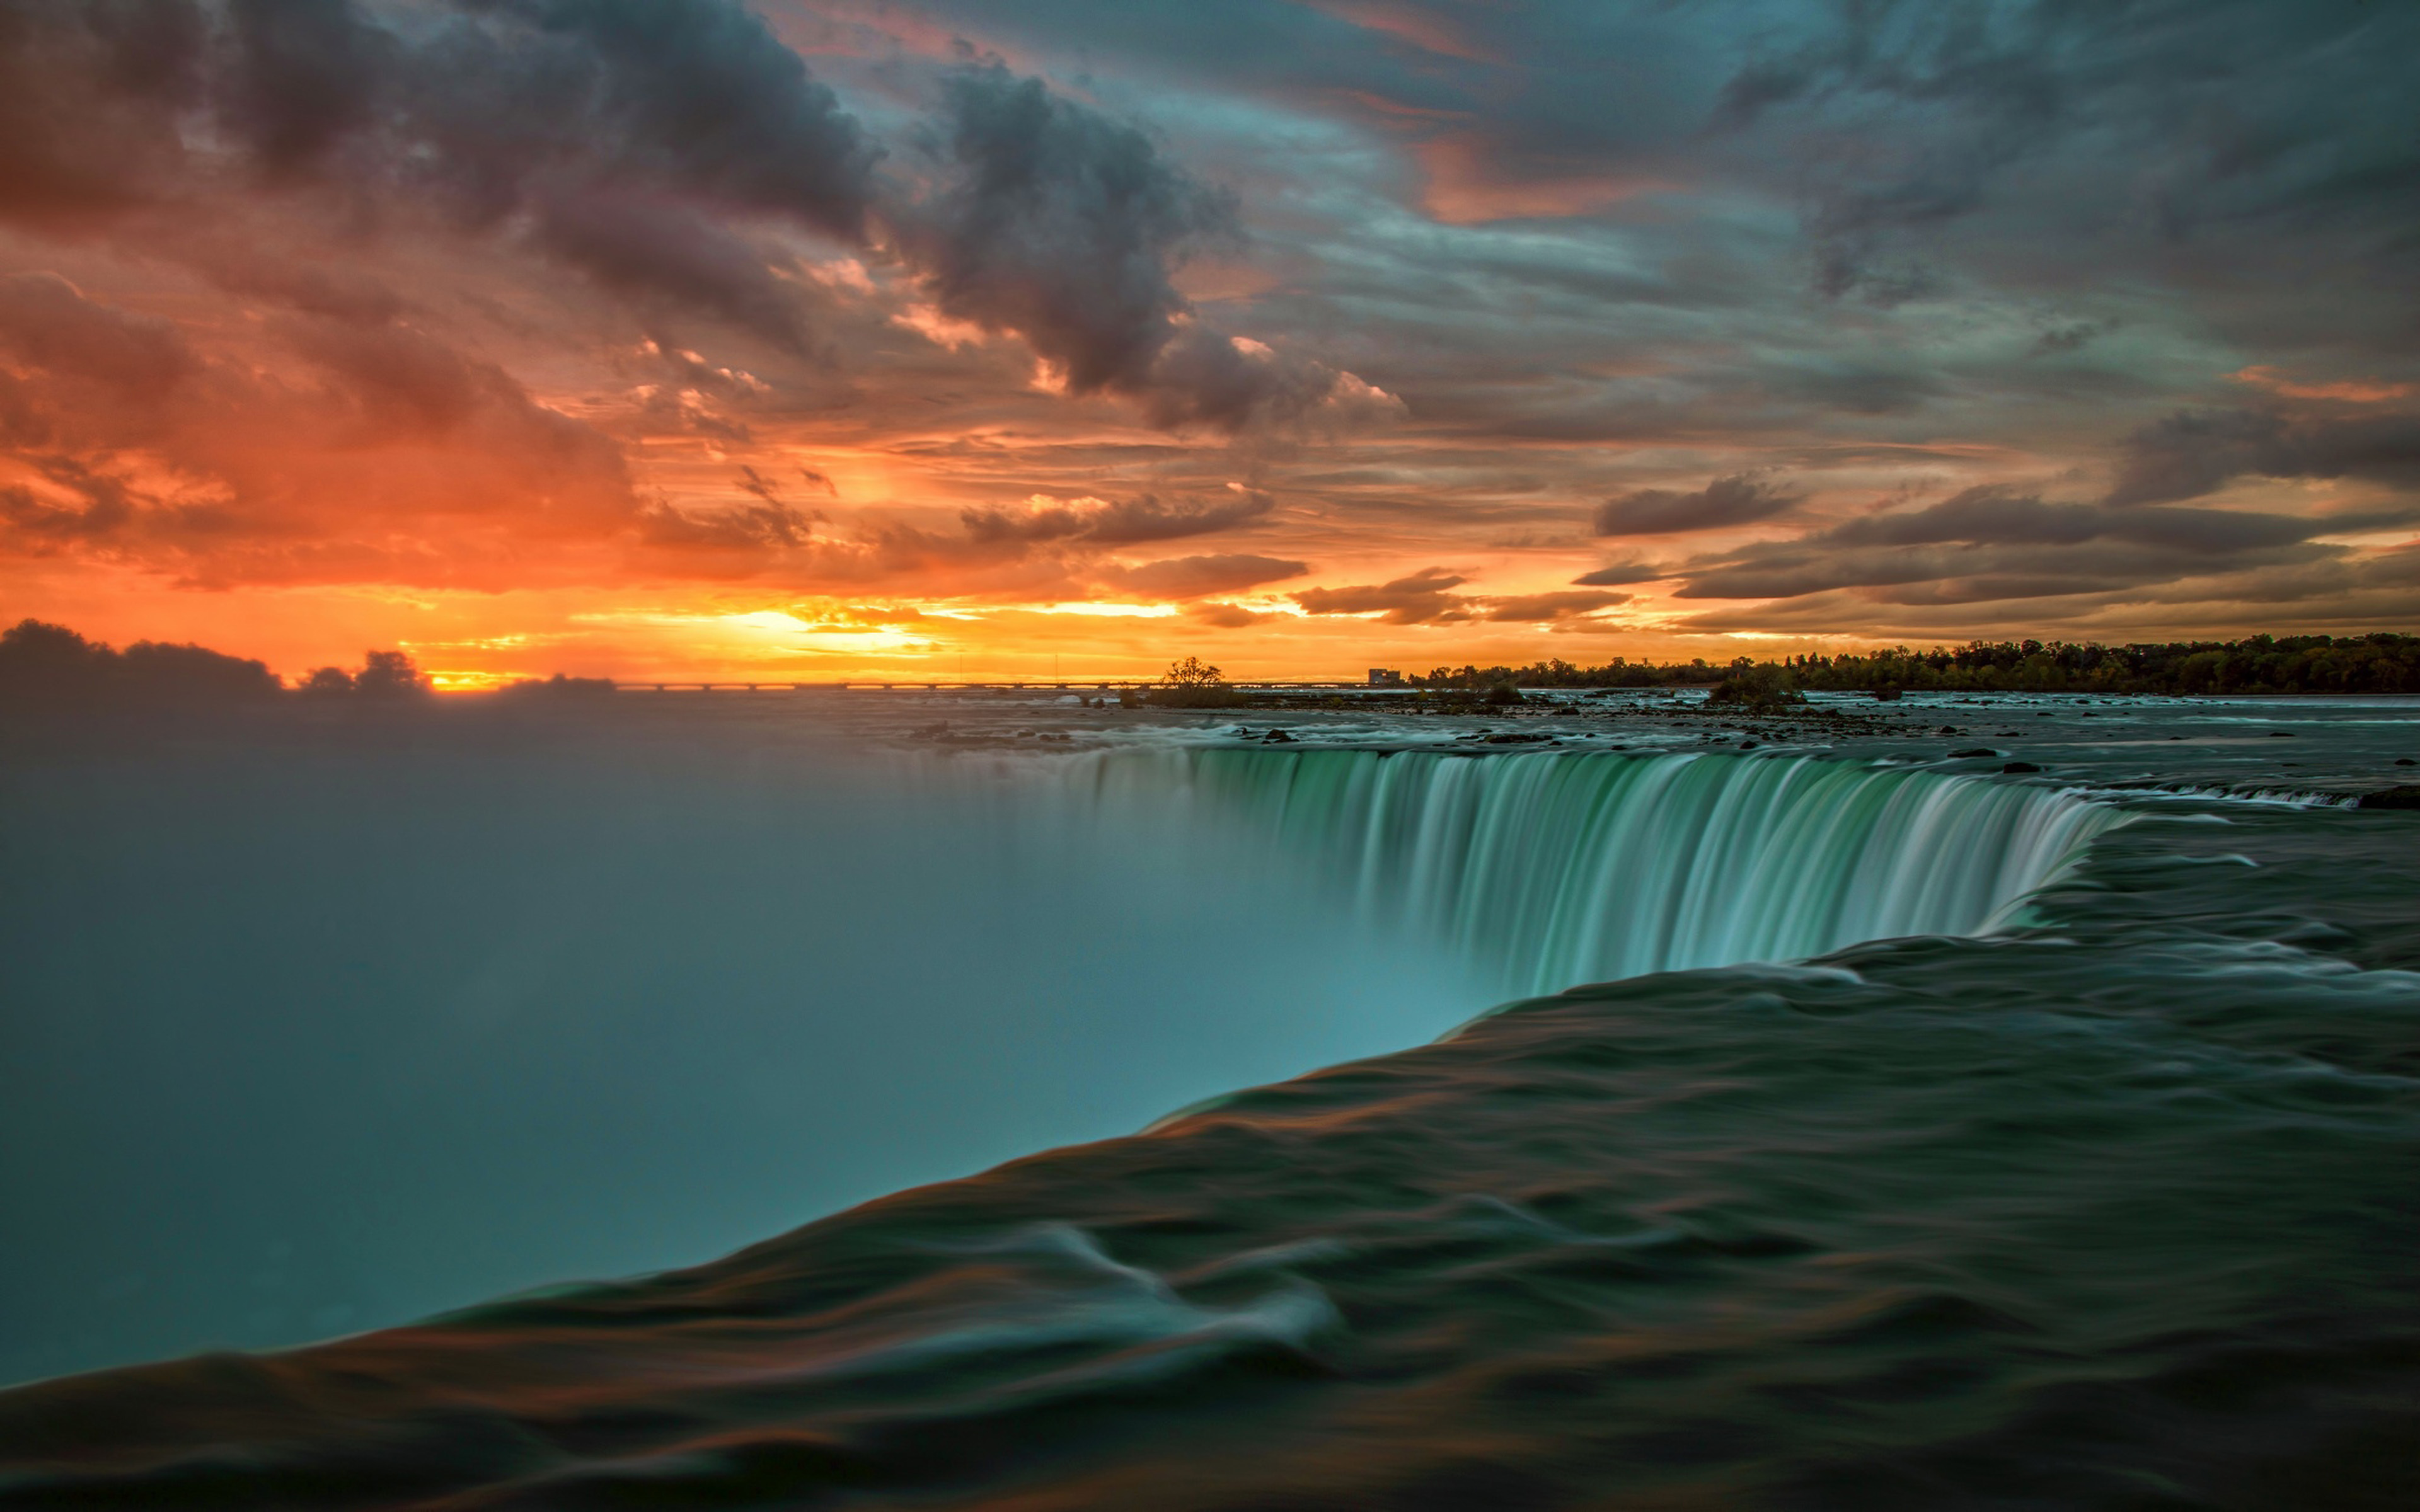 Niagara Falls In Canada Sunset Landscape Nature 4k Ultra Hd Desktop Wallpapers For Computers